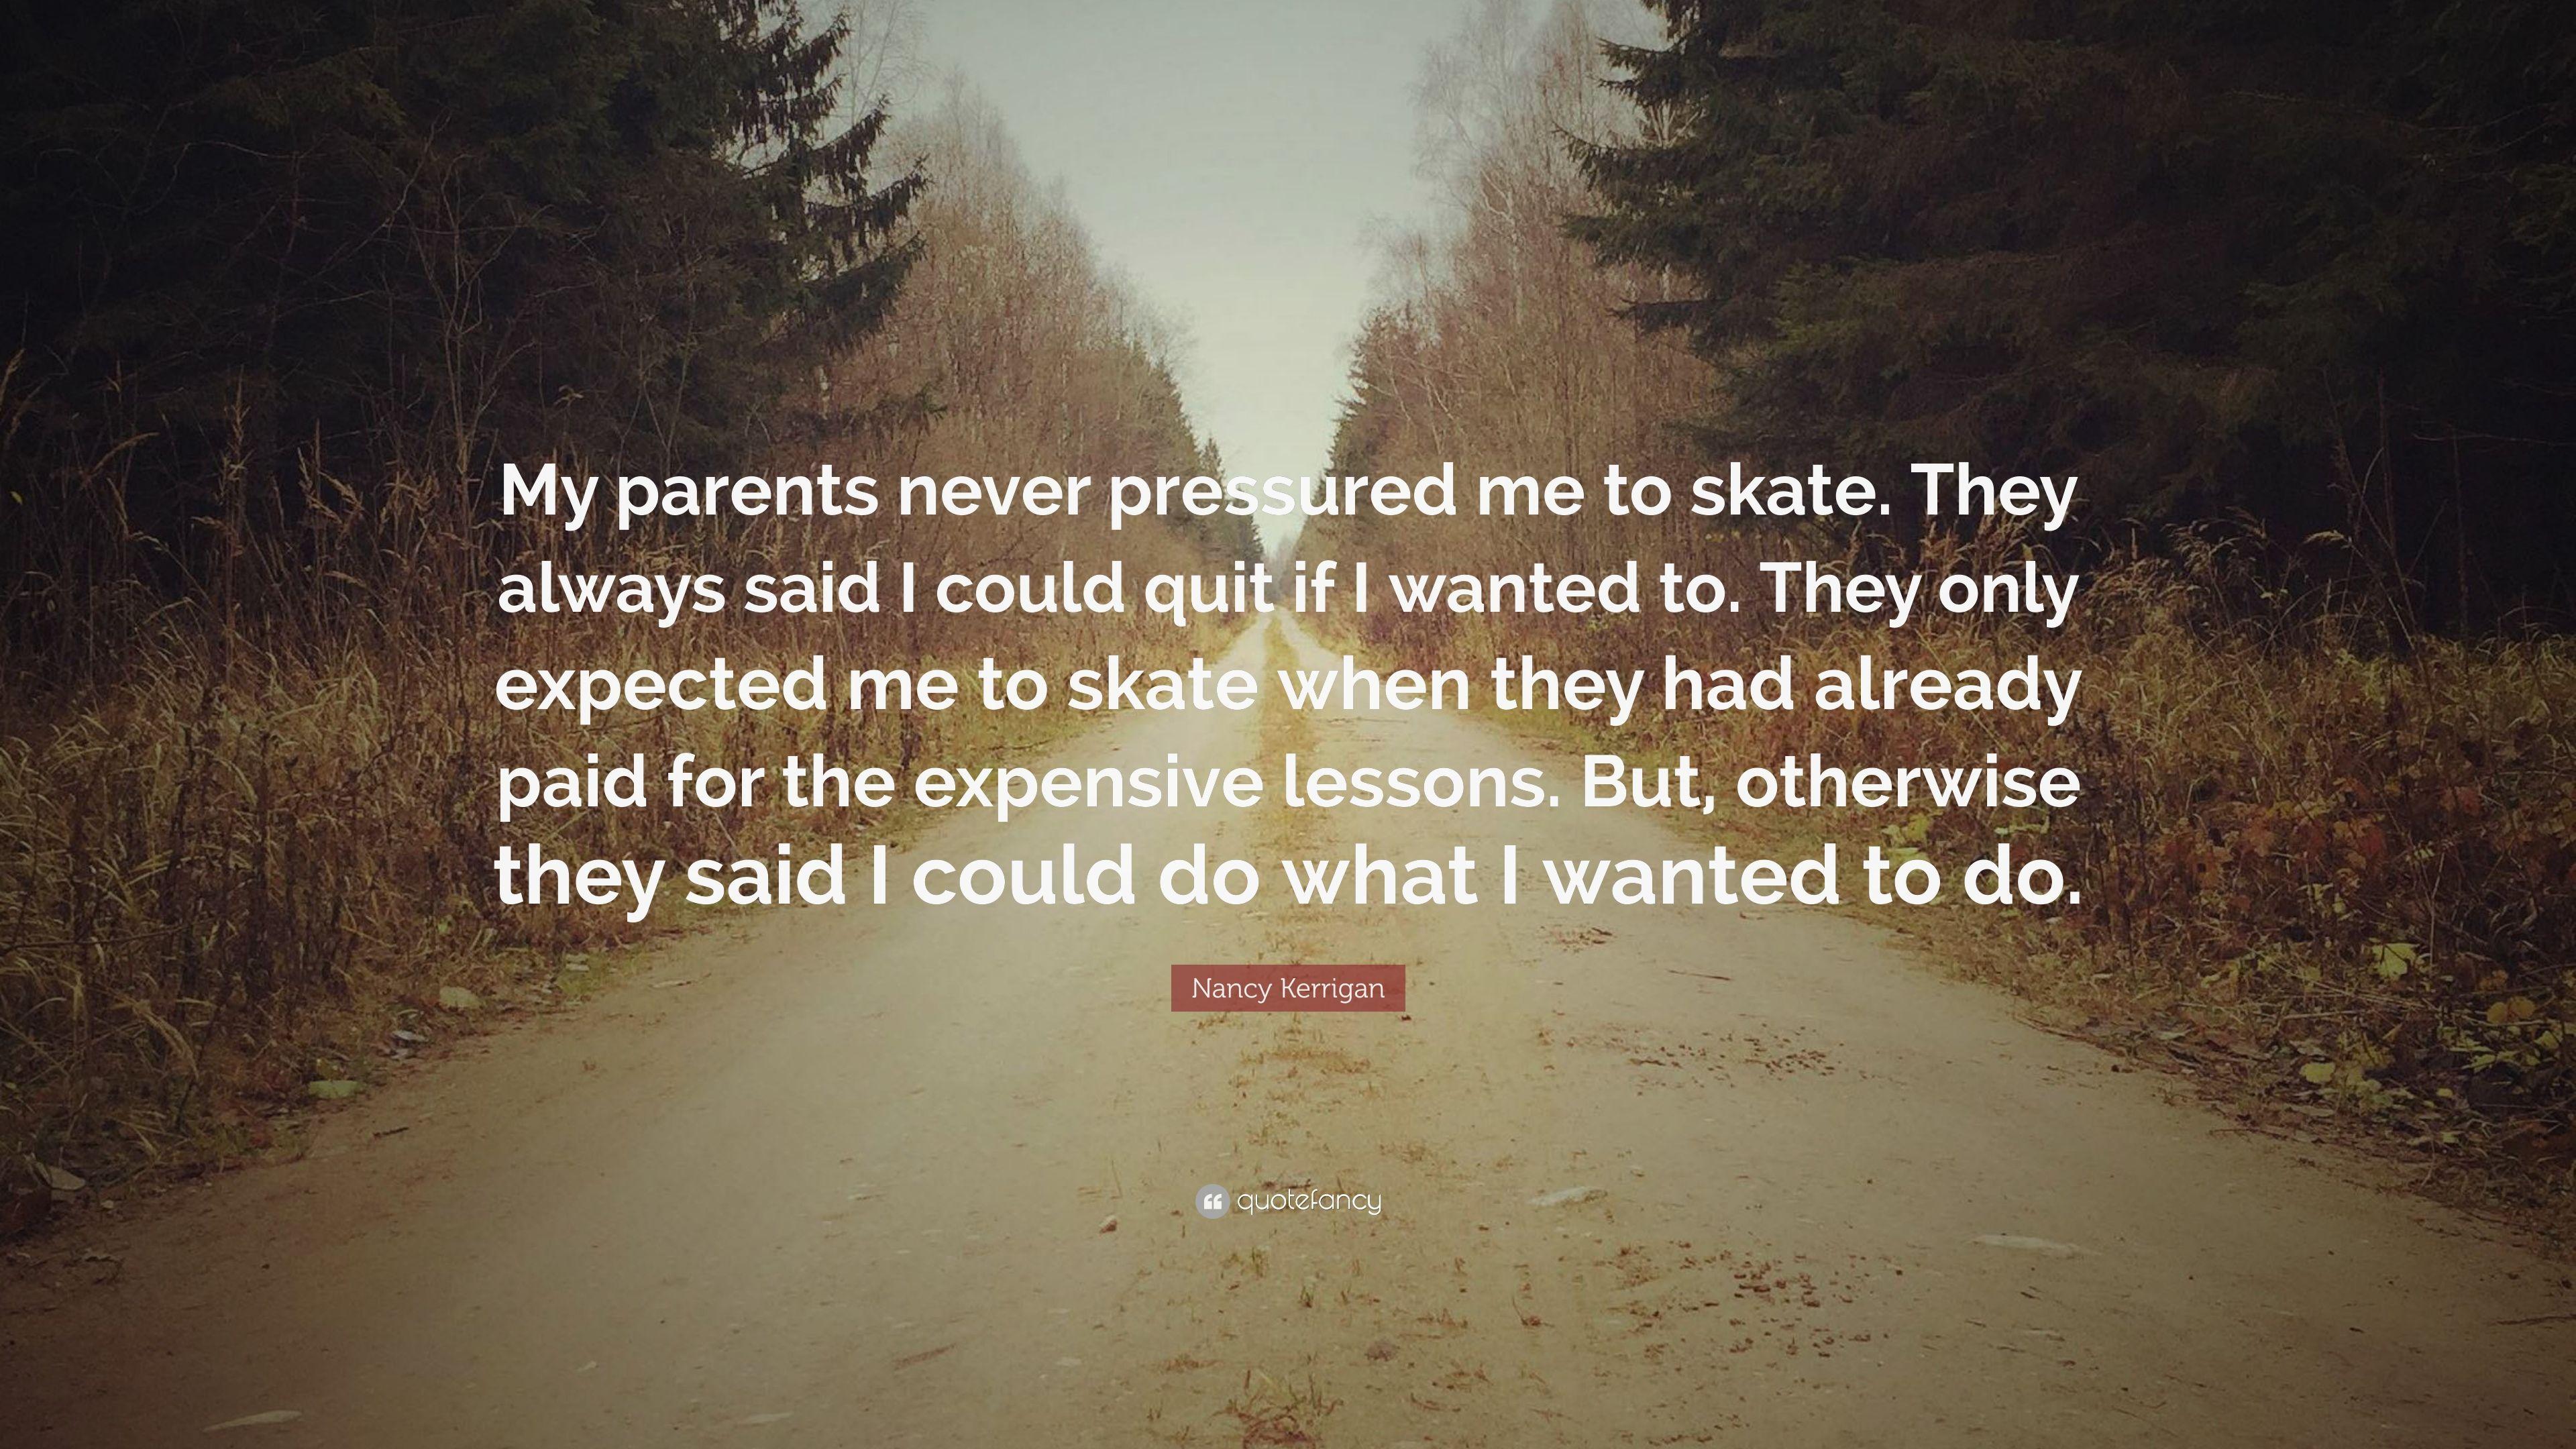 Nancy Kerrigan Quote: “My parents never pressured me to skate